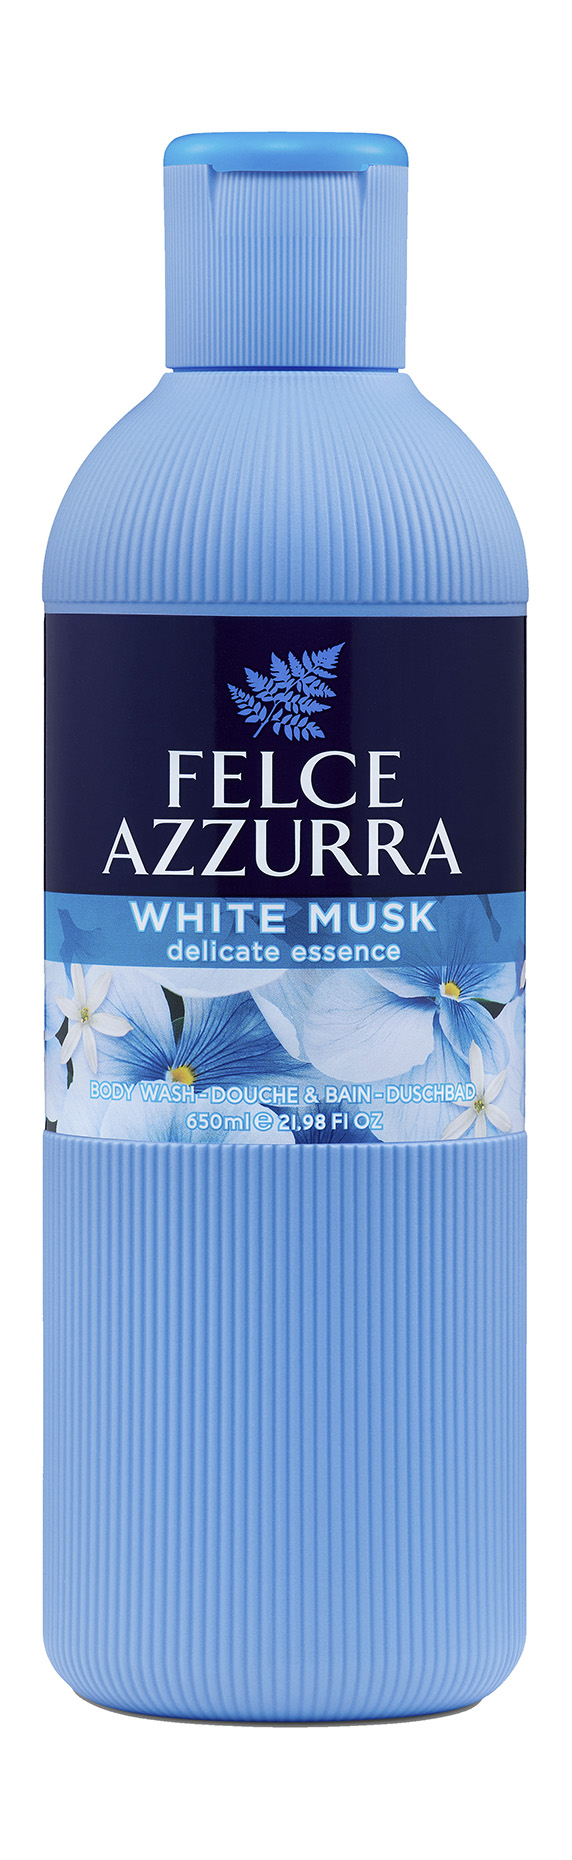 Гель для душа Felce Azzurra White Musk Delicate Essence парфюмированный, 650 мл dalan гель для душа le jardin орхидея и лилия 500